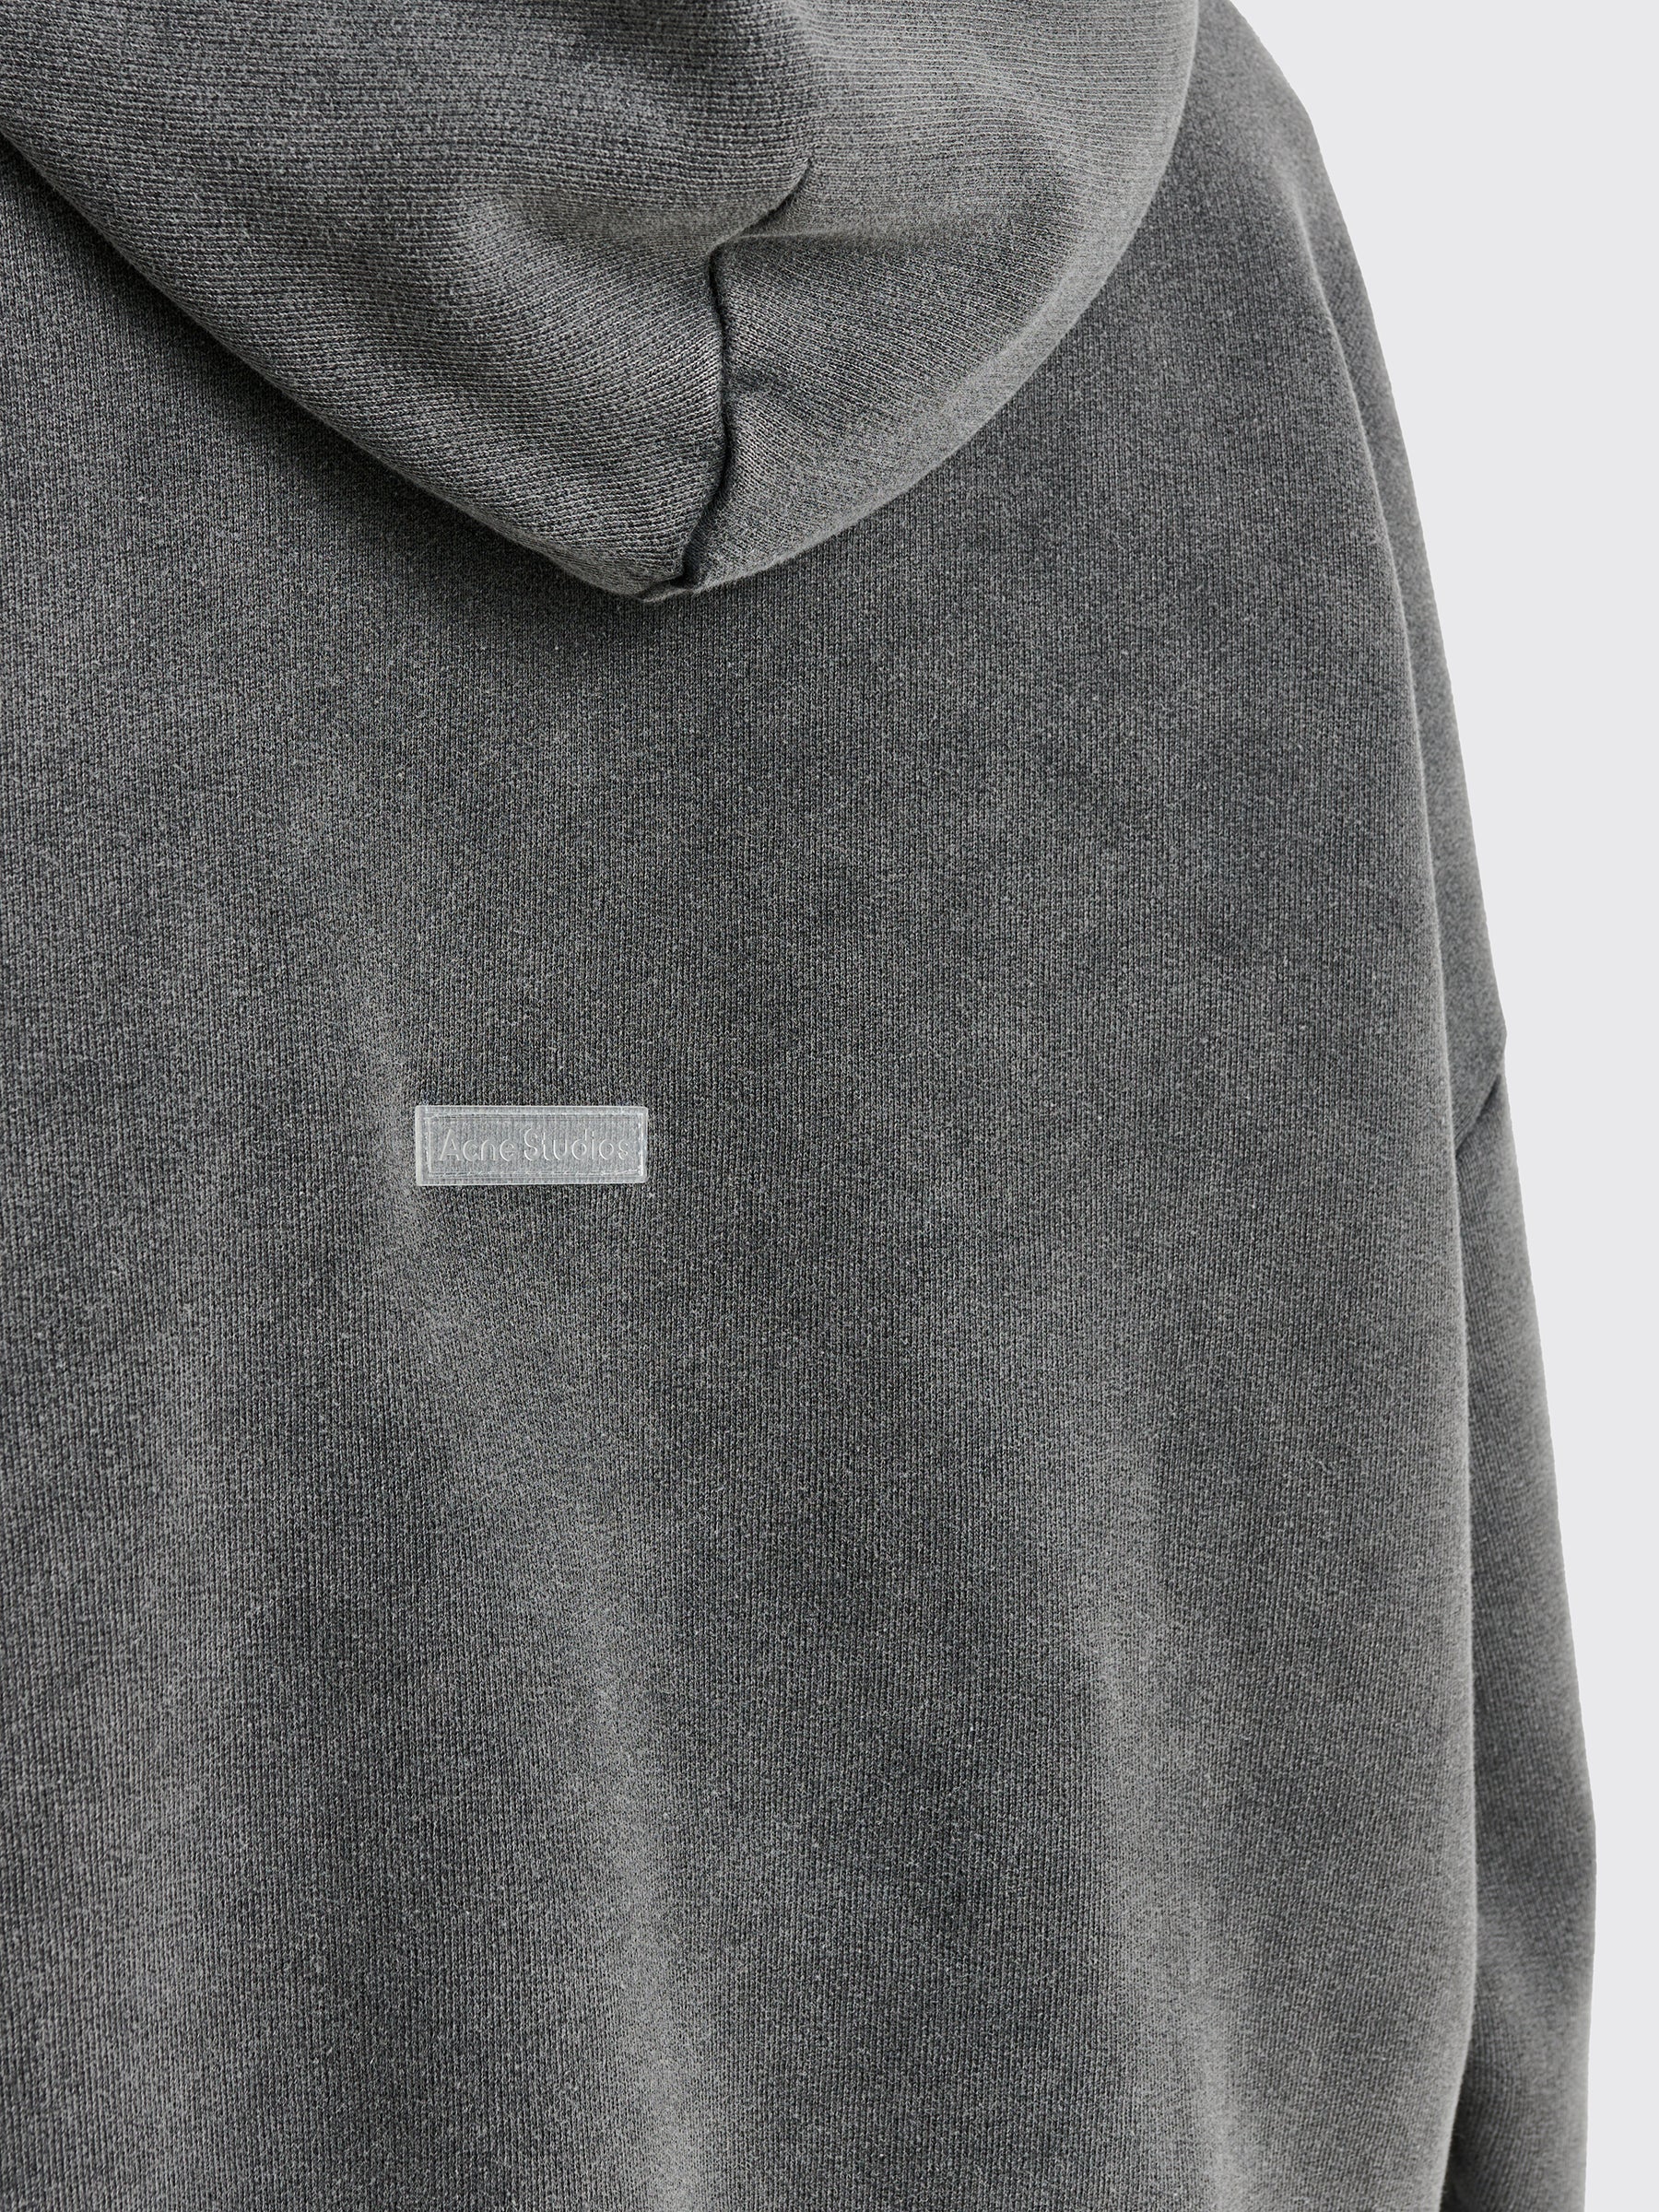 Acne Studios Hooded Sweatshirt Faded Black